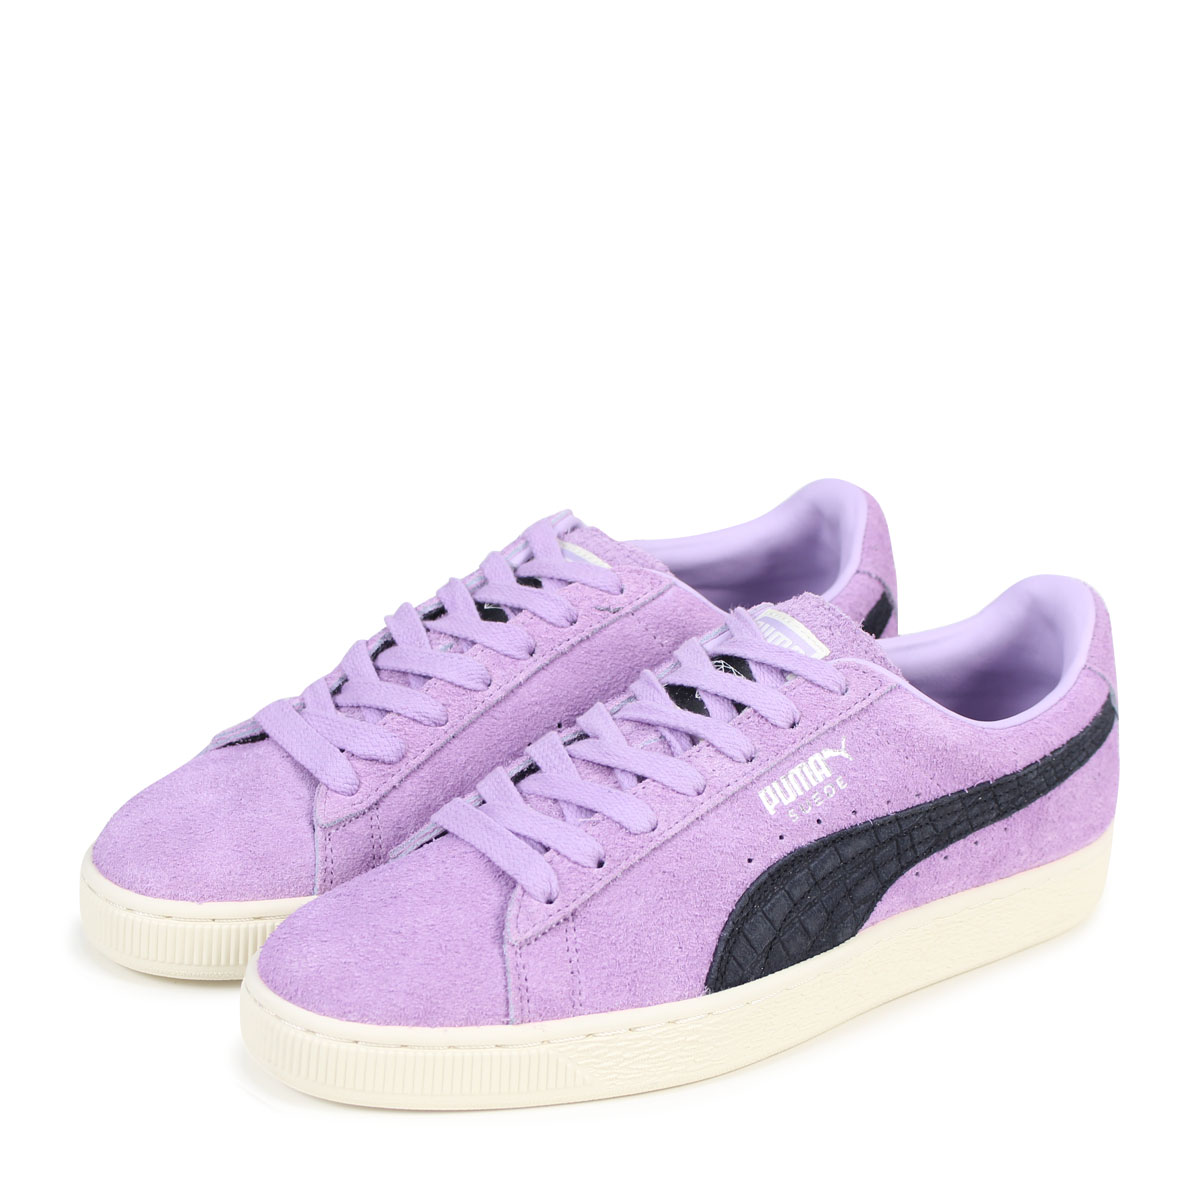 purple puma shoes mens